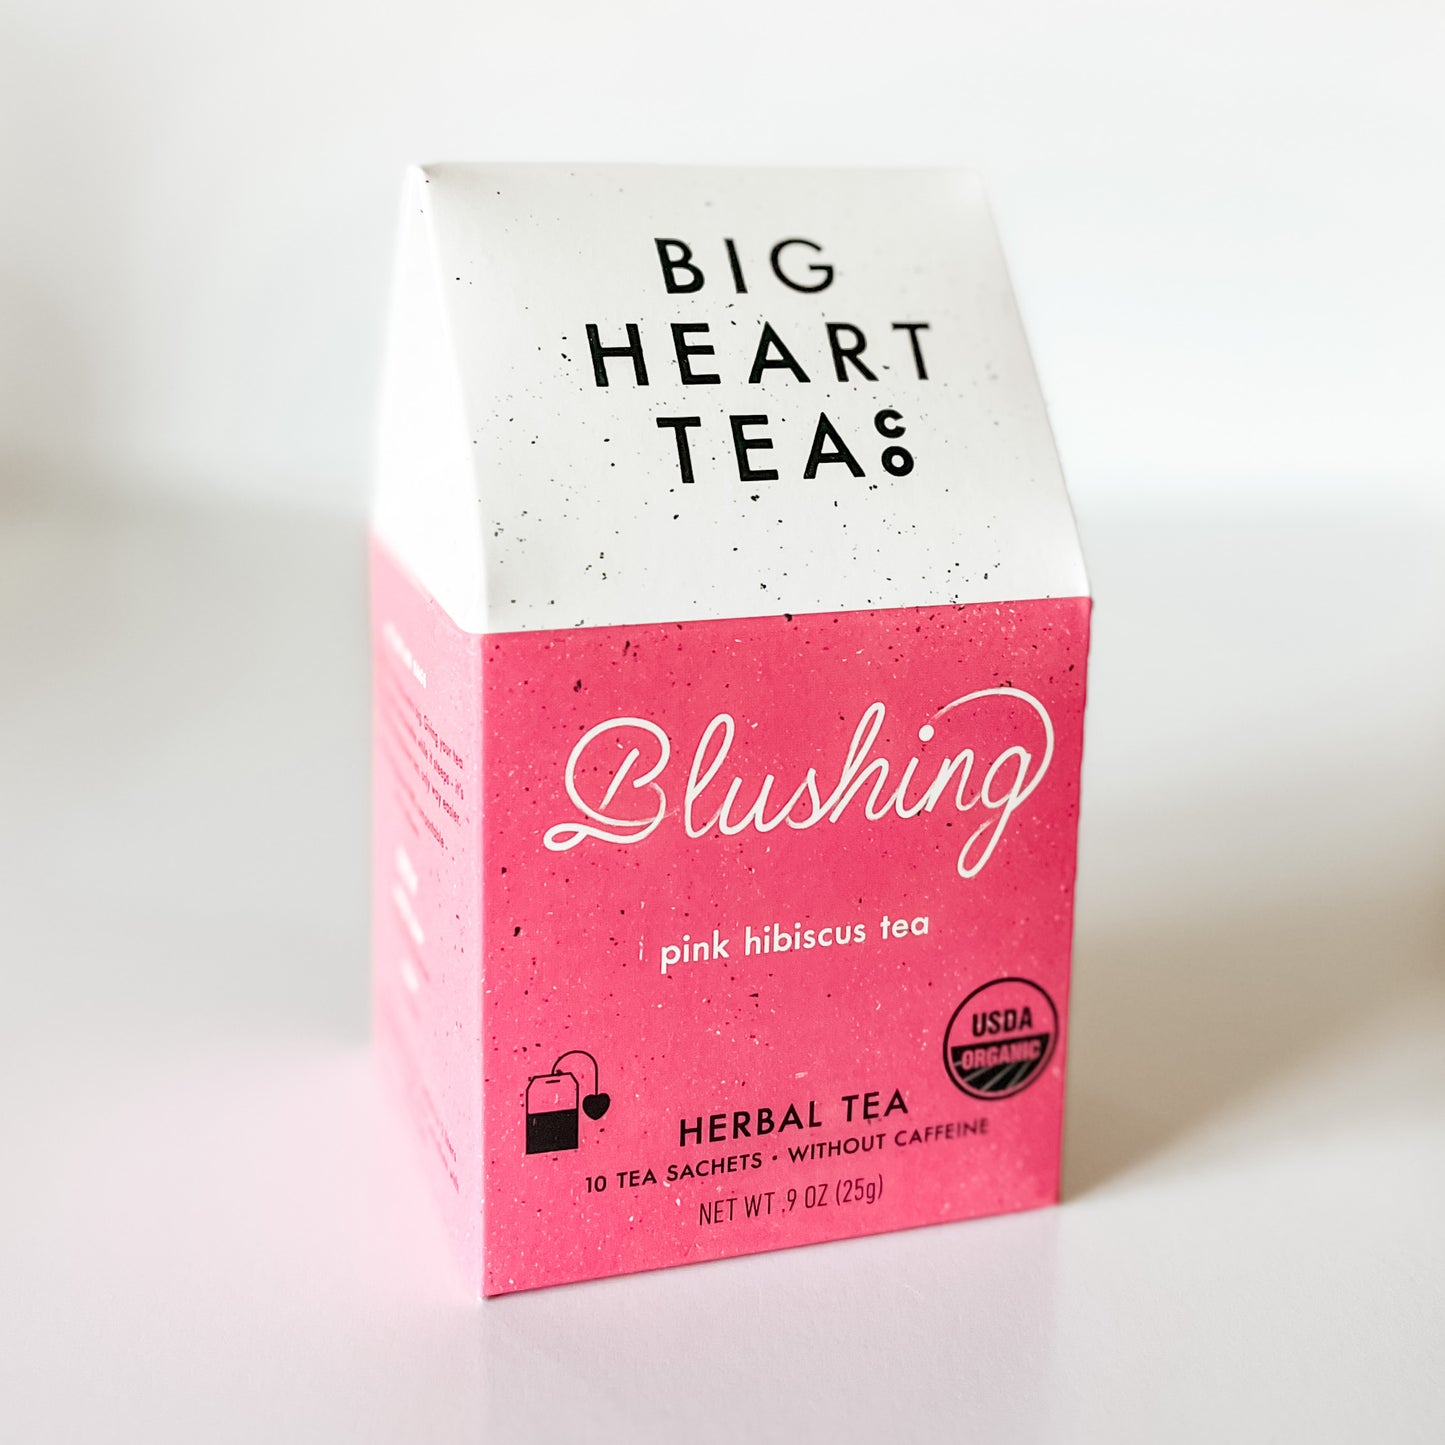 big heart tea co blushing herbal tea, 10 tea sachets 